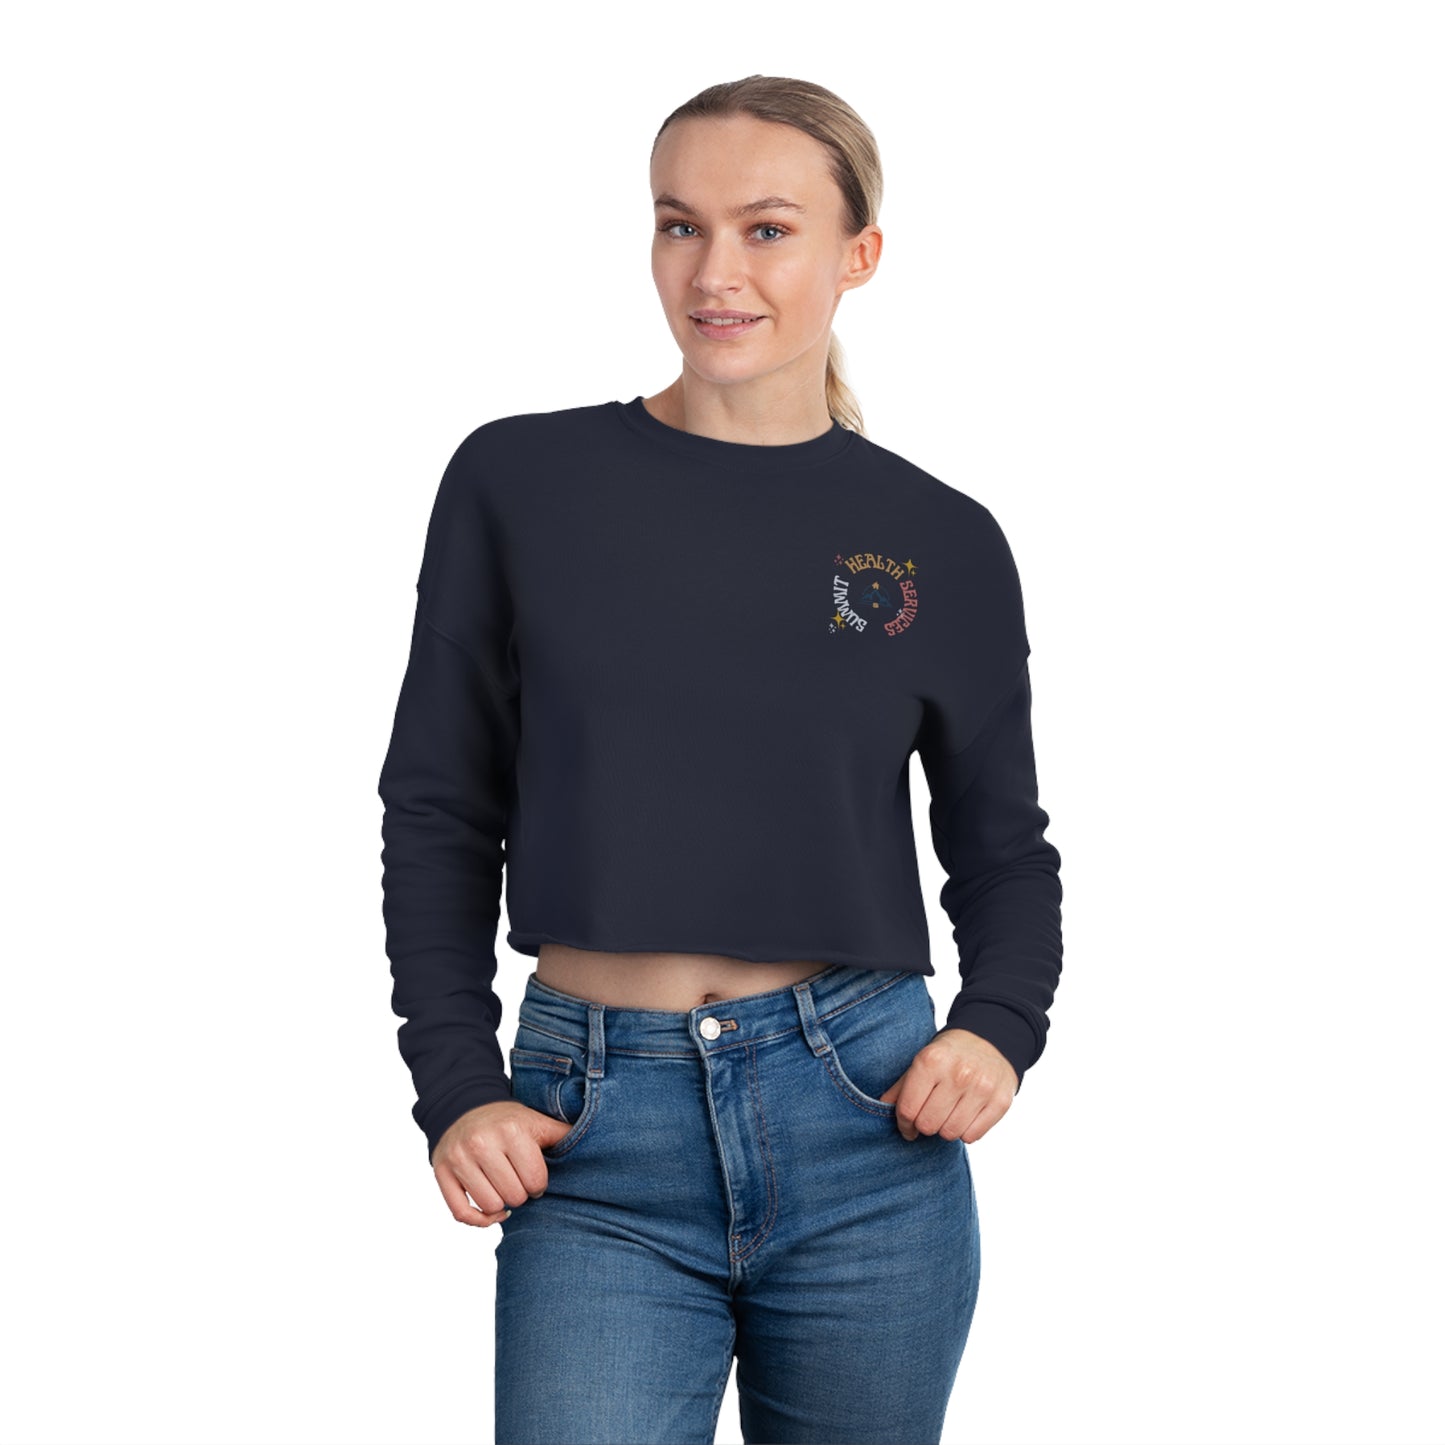 BEHAVIOR ERA Women's Cropped Sweatshirt